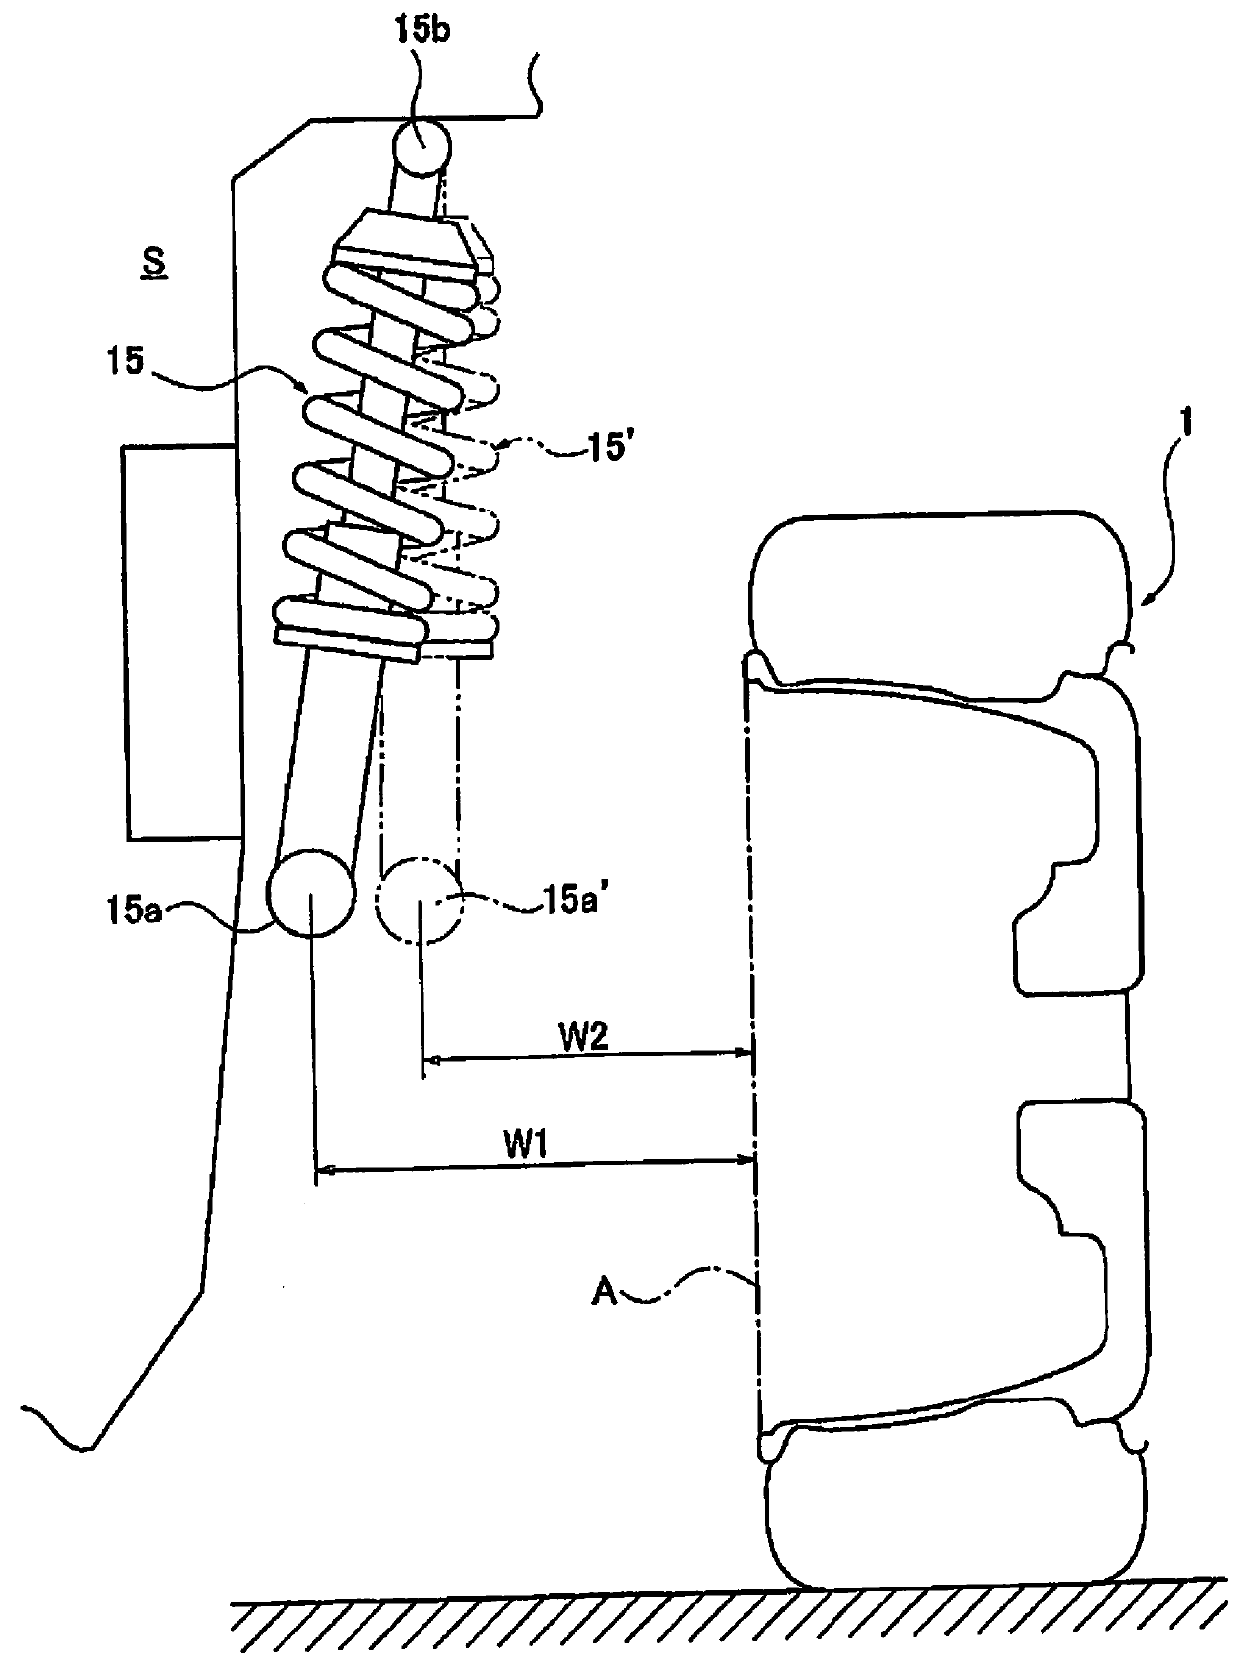 Suspension device for in-wheel motor driven wheel